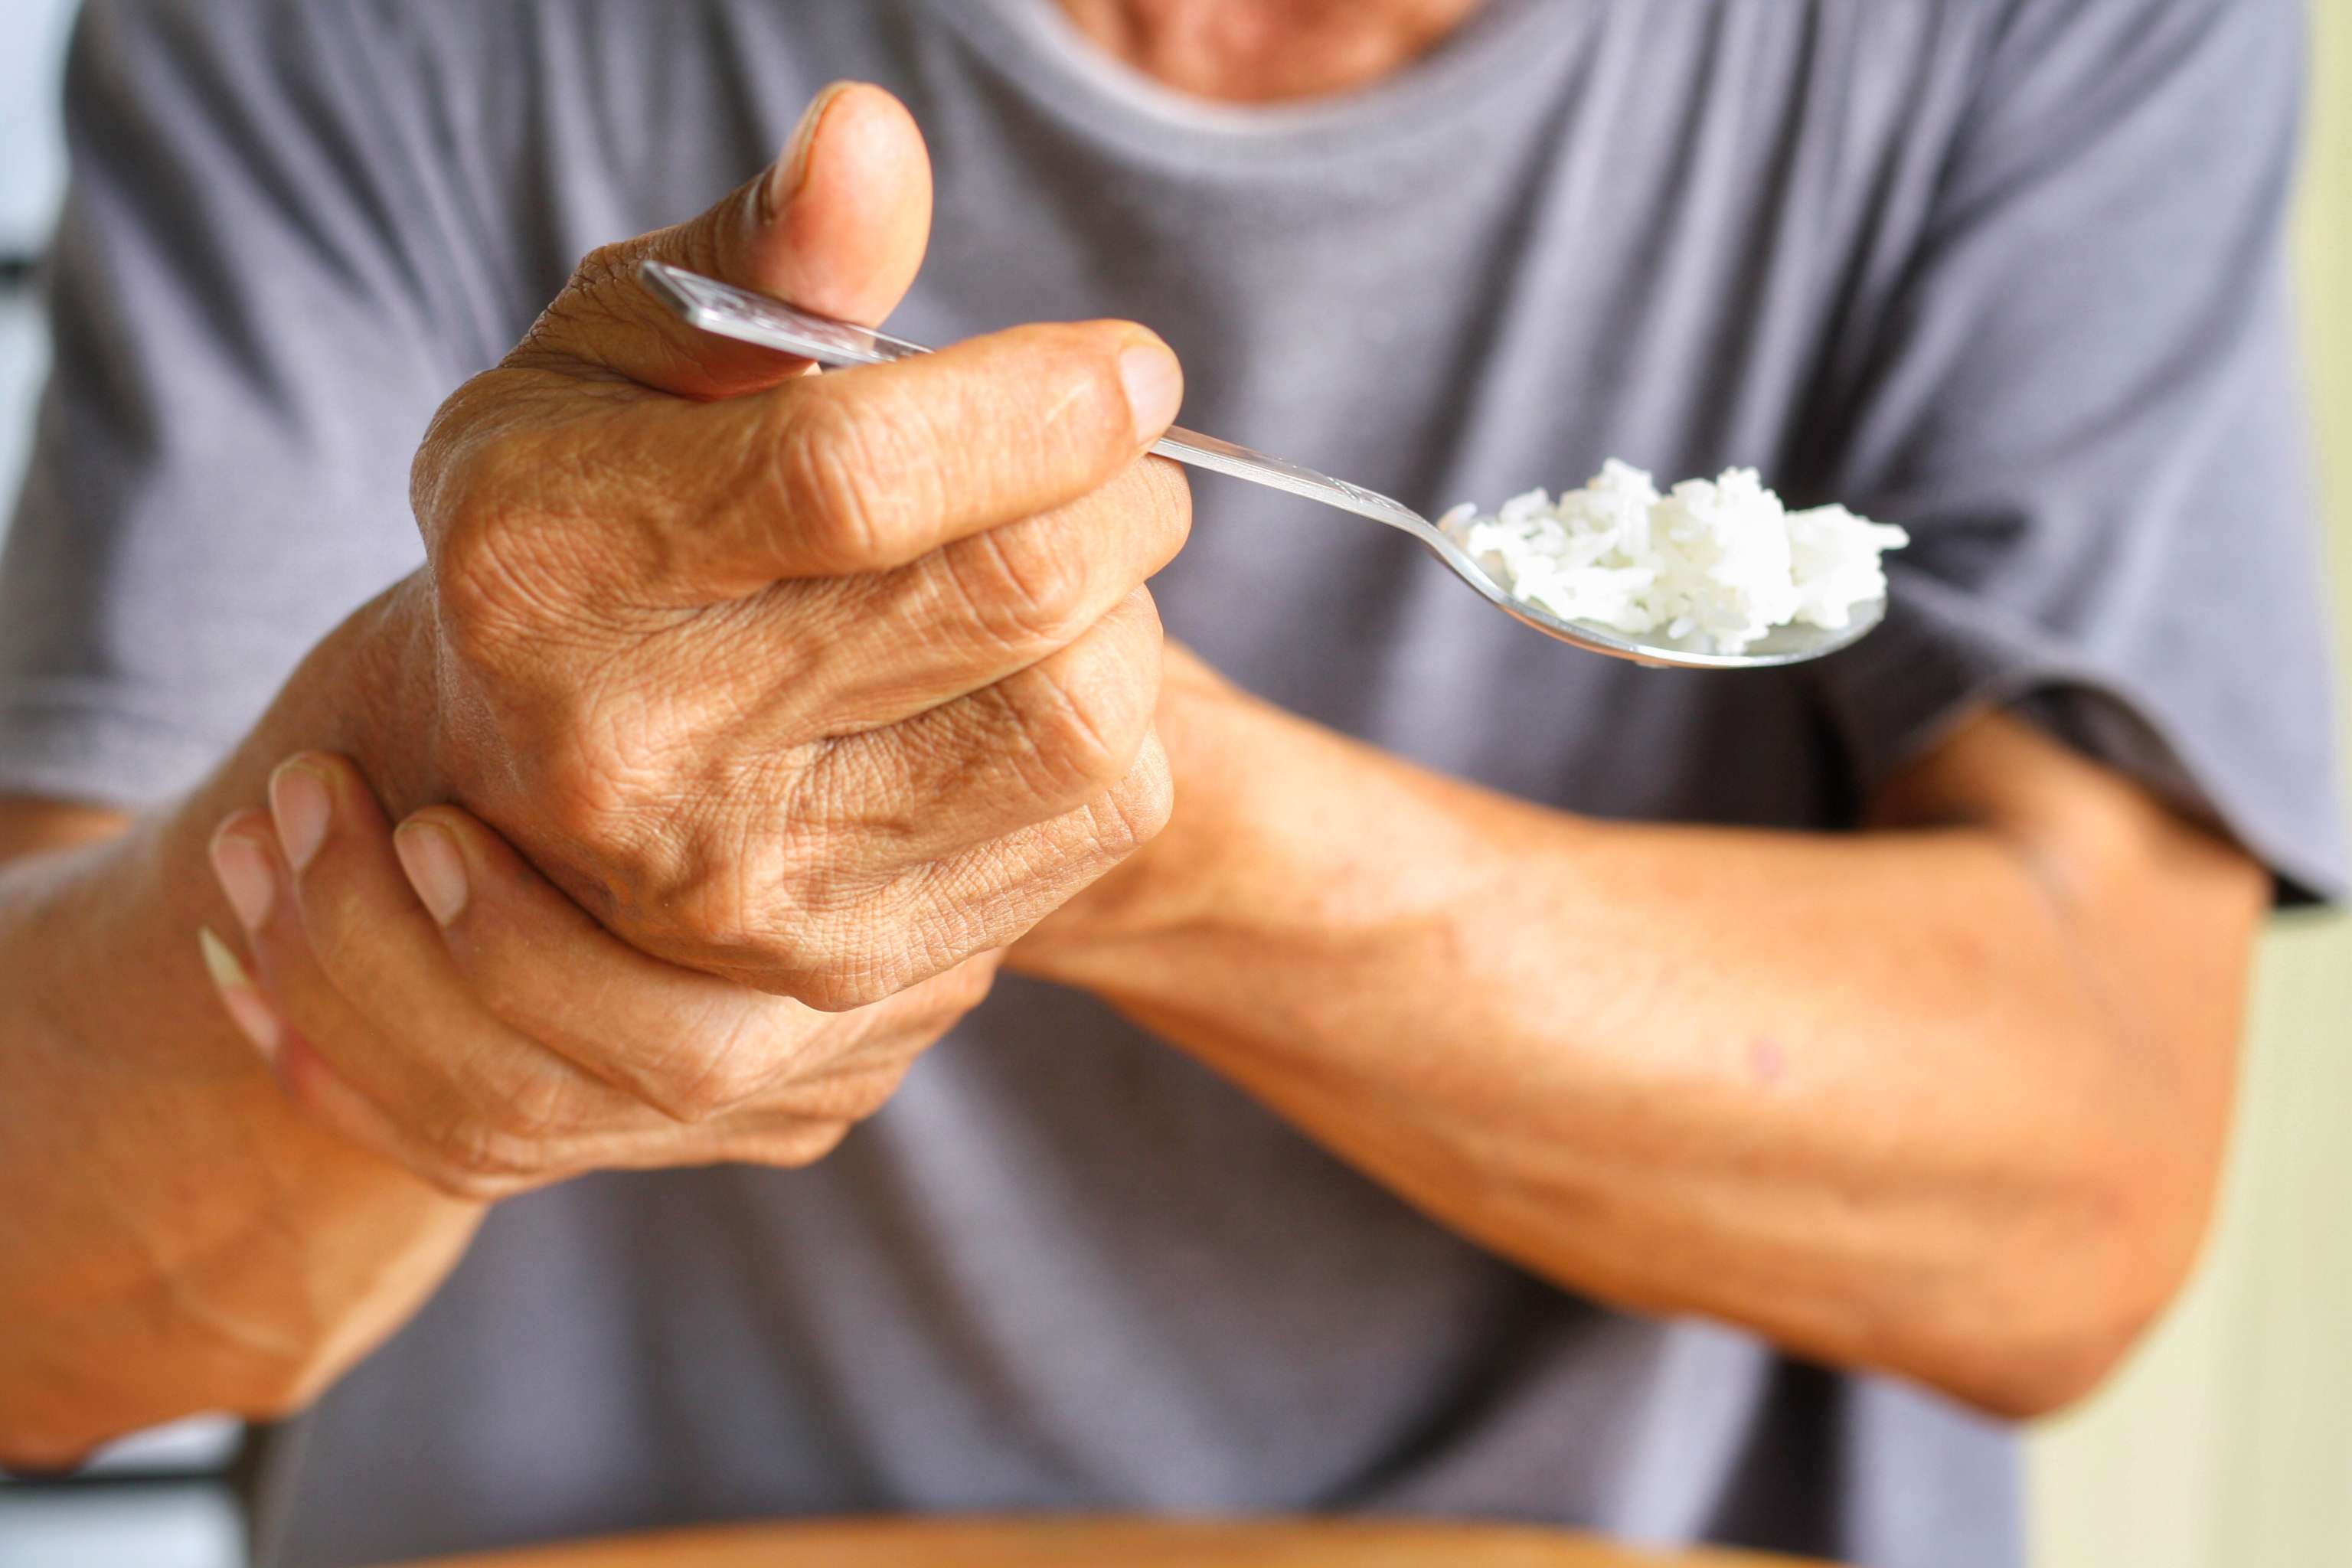 Antidiabetic drug shows effect on motor symptoms of Parkinson's patients